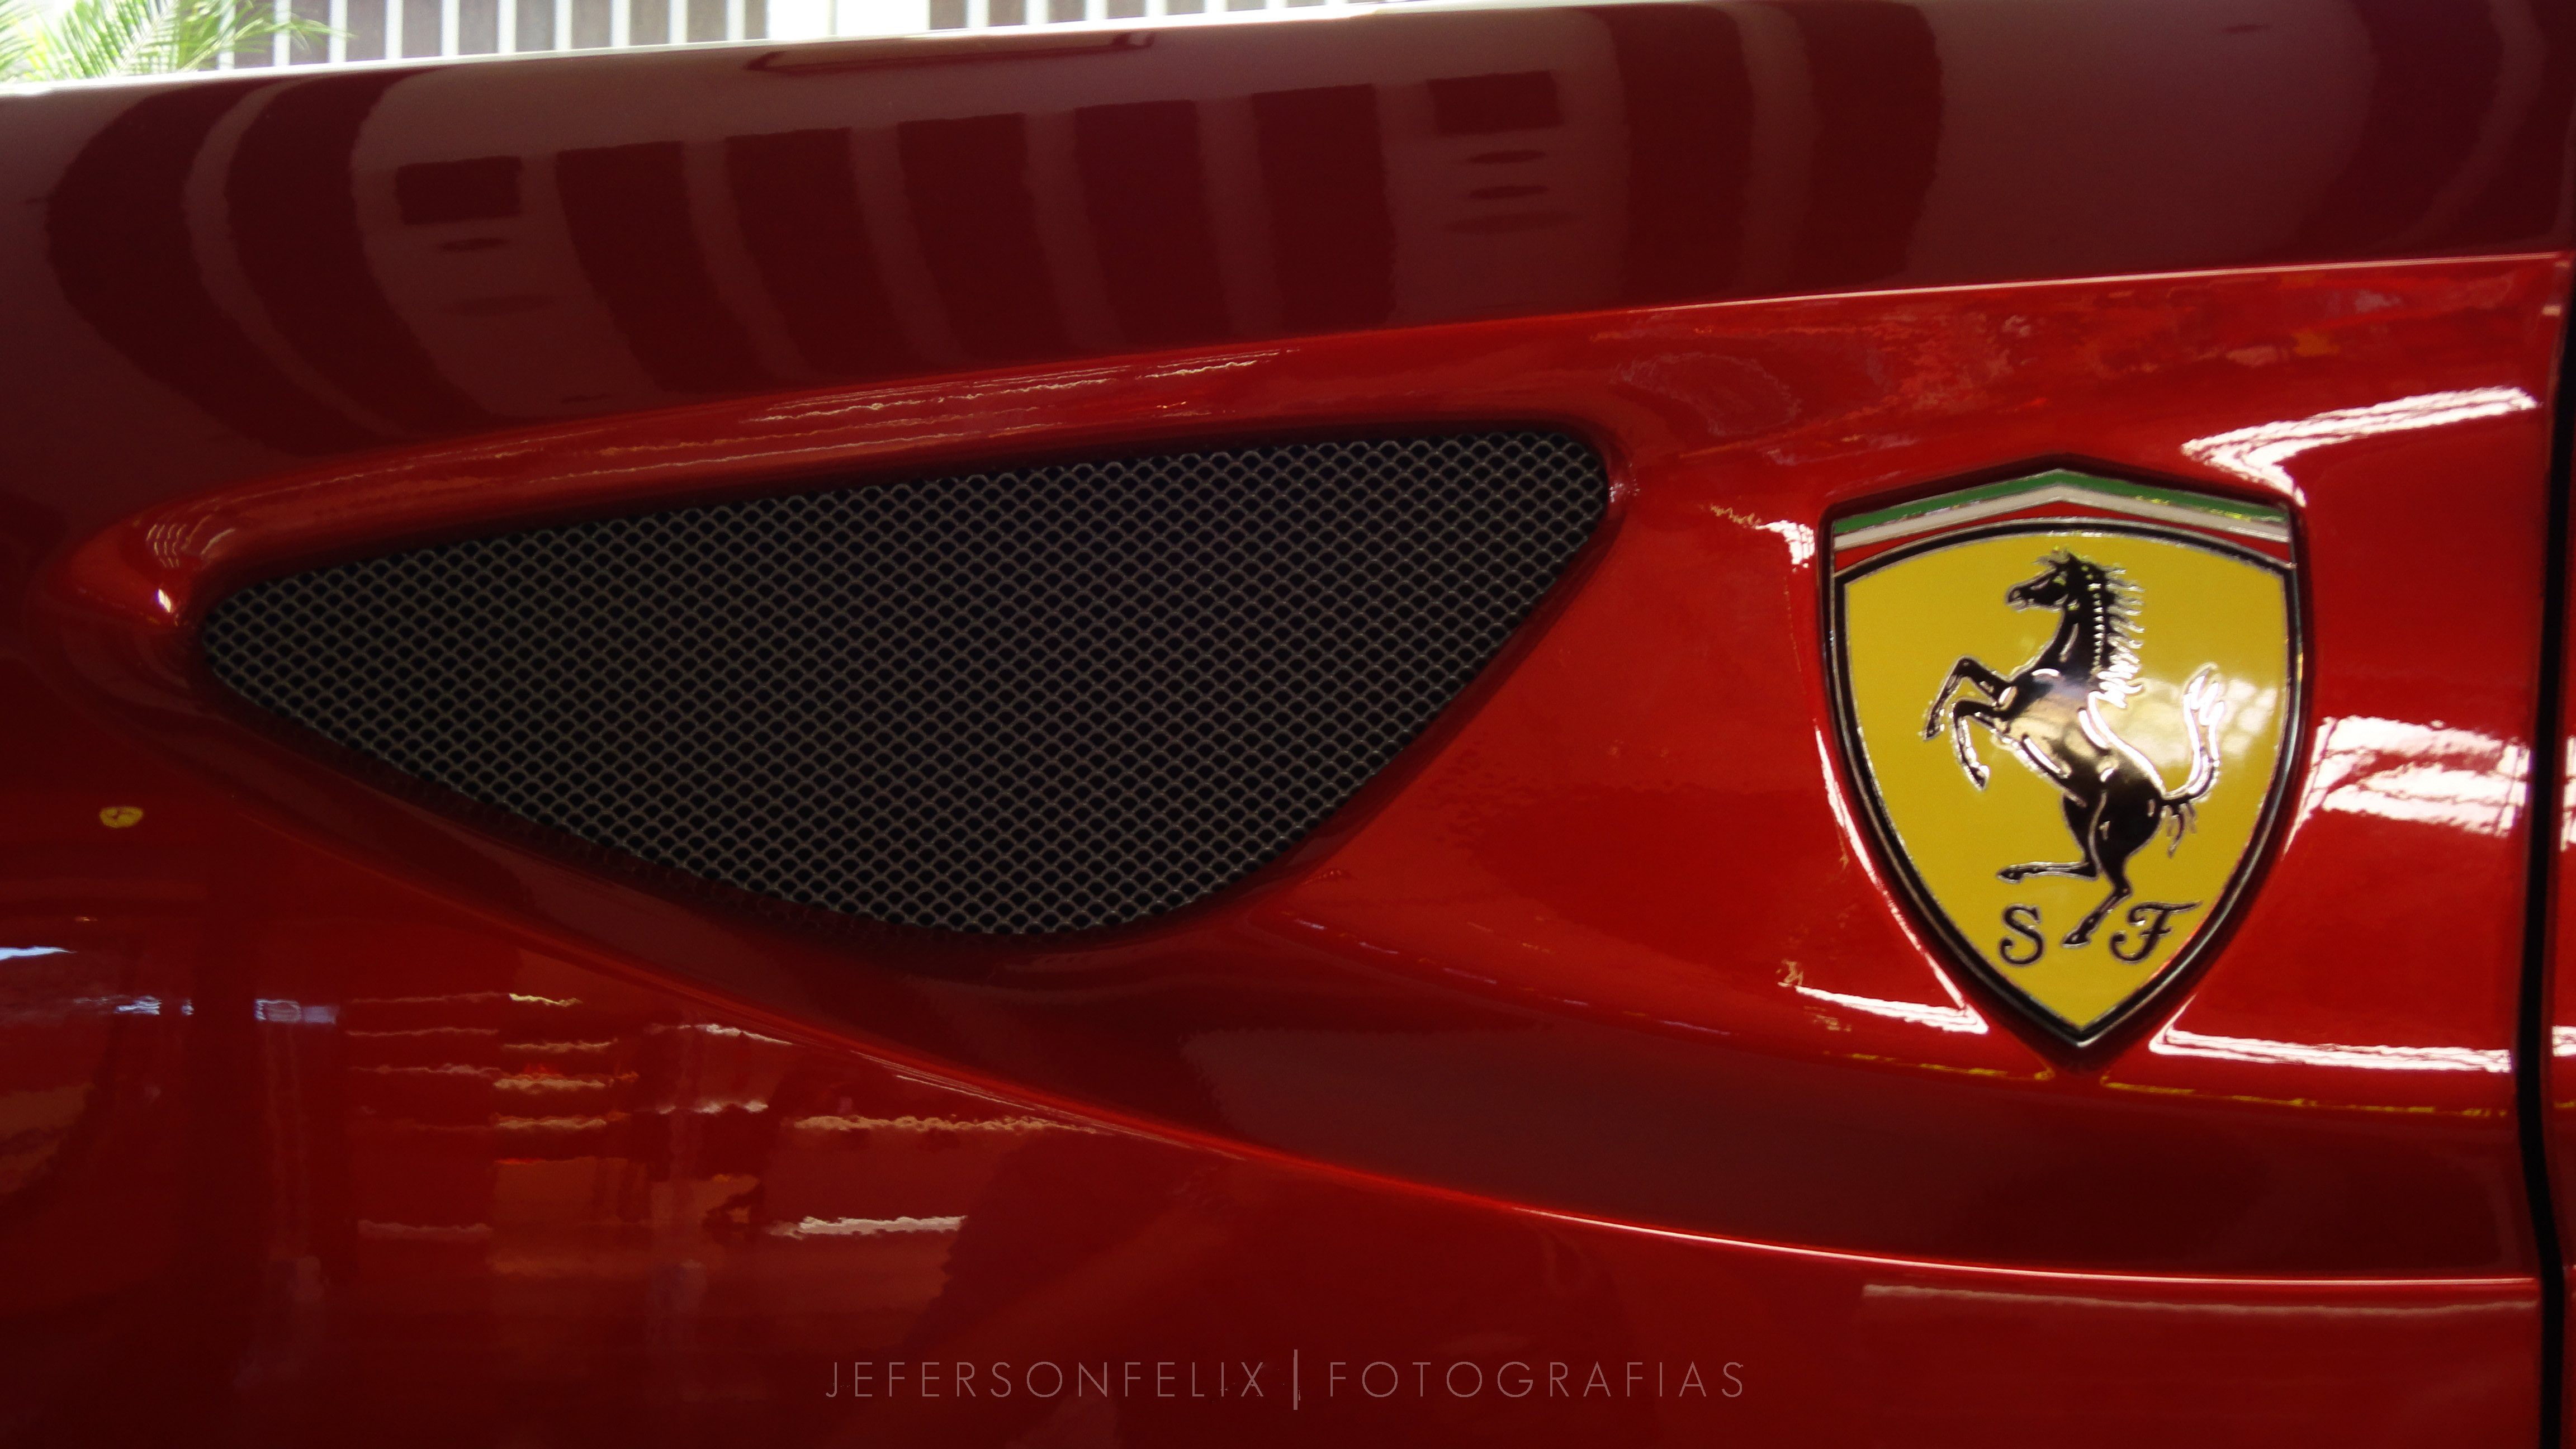 Ferrari FF, car, red, mode of transportation, communication